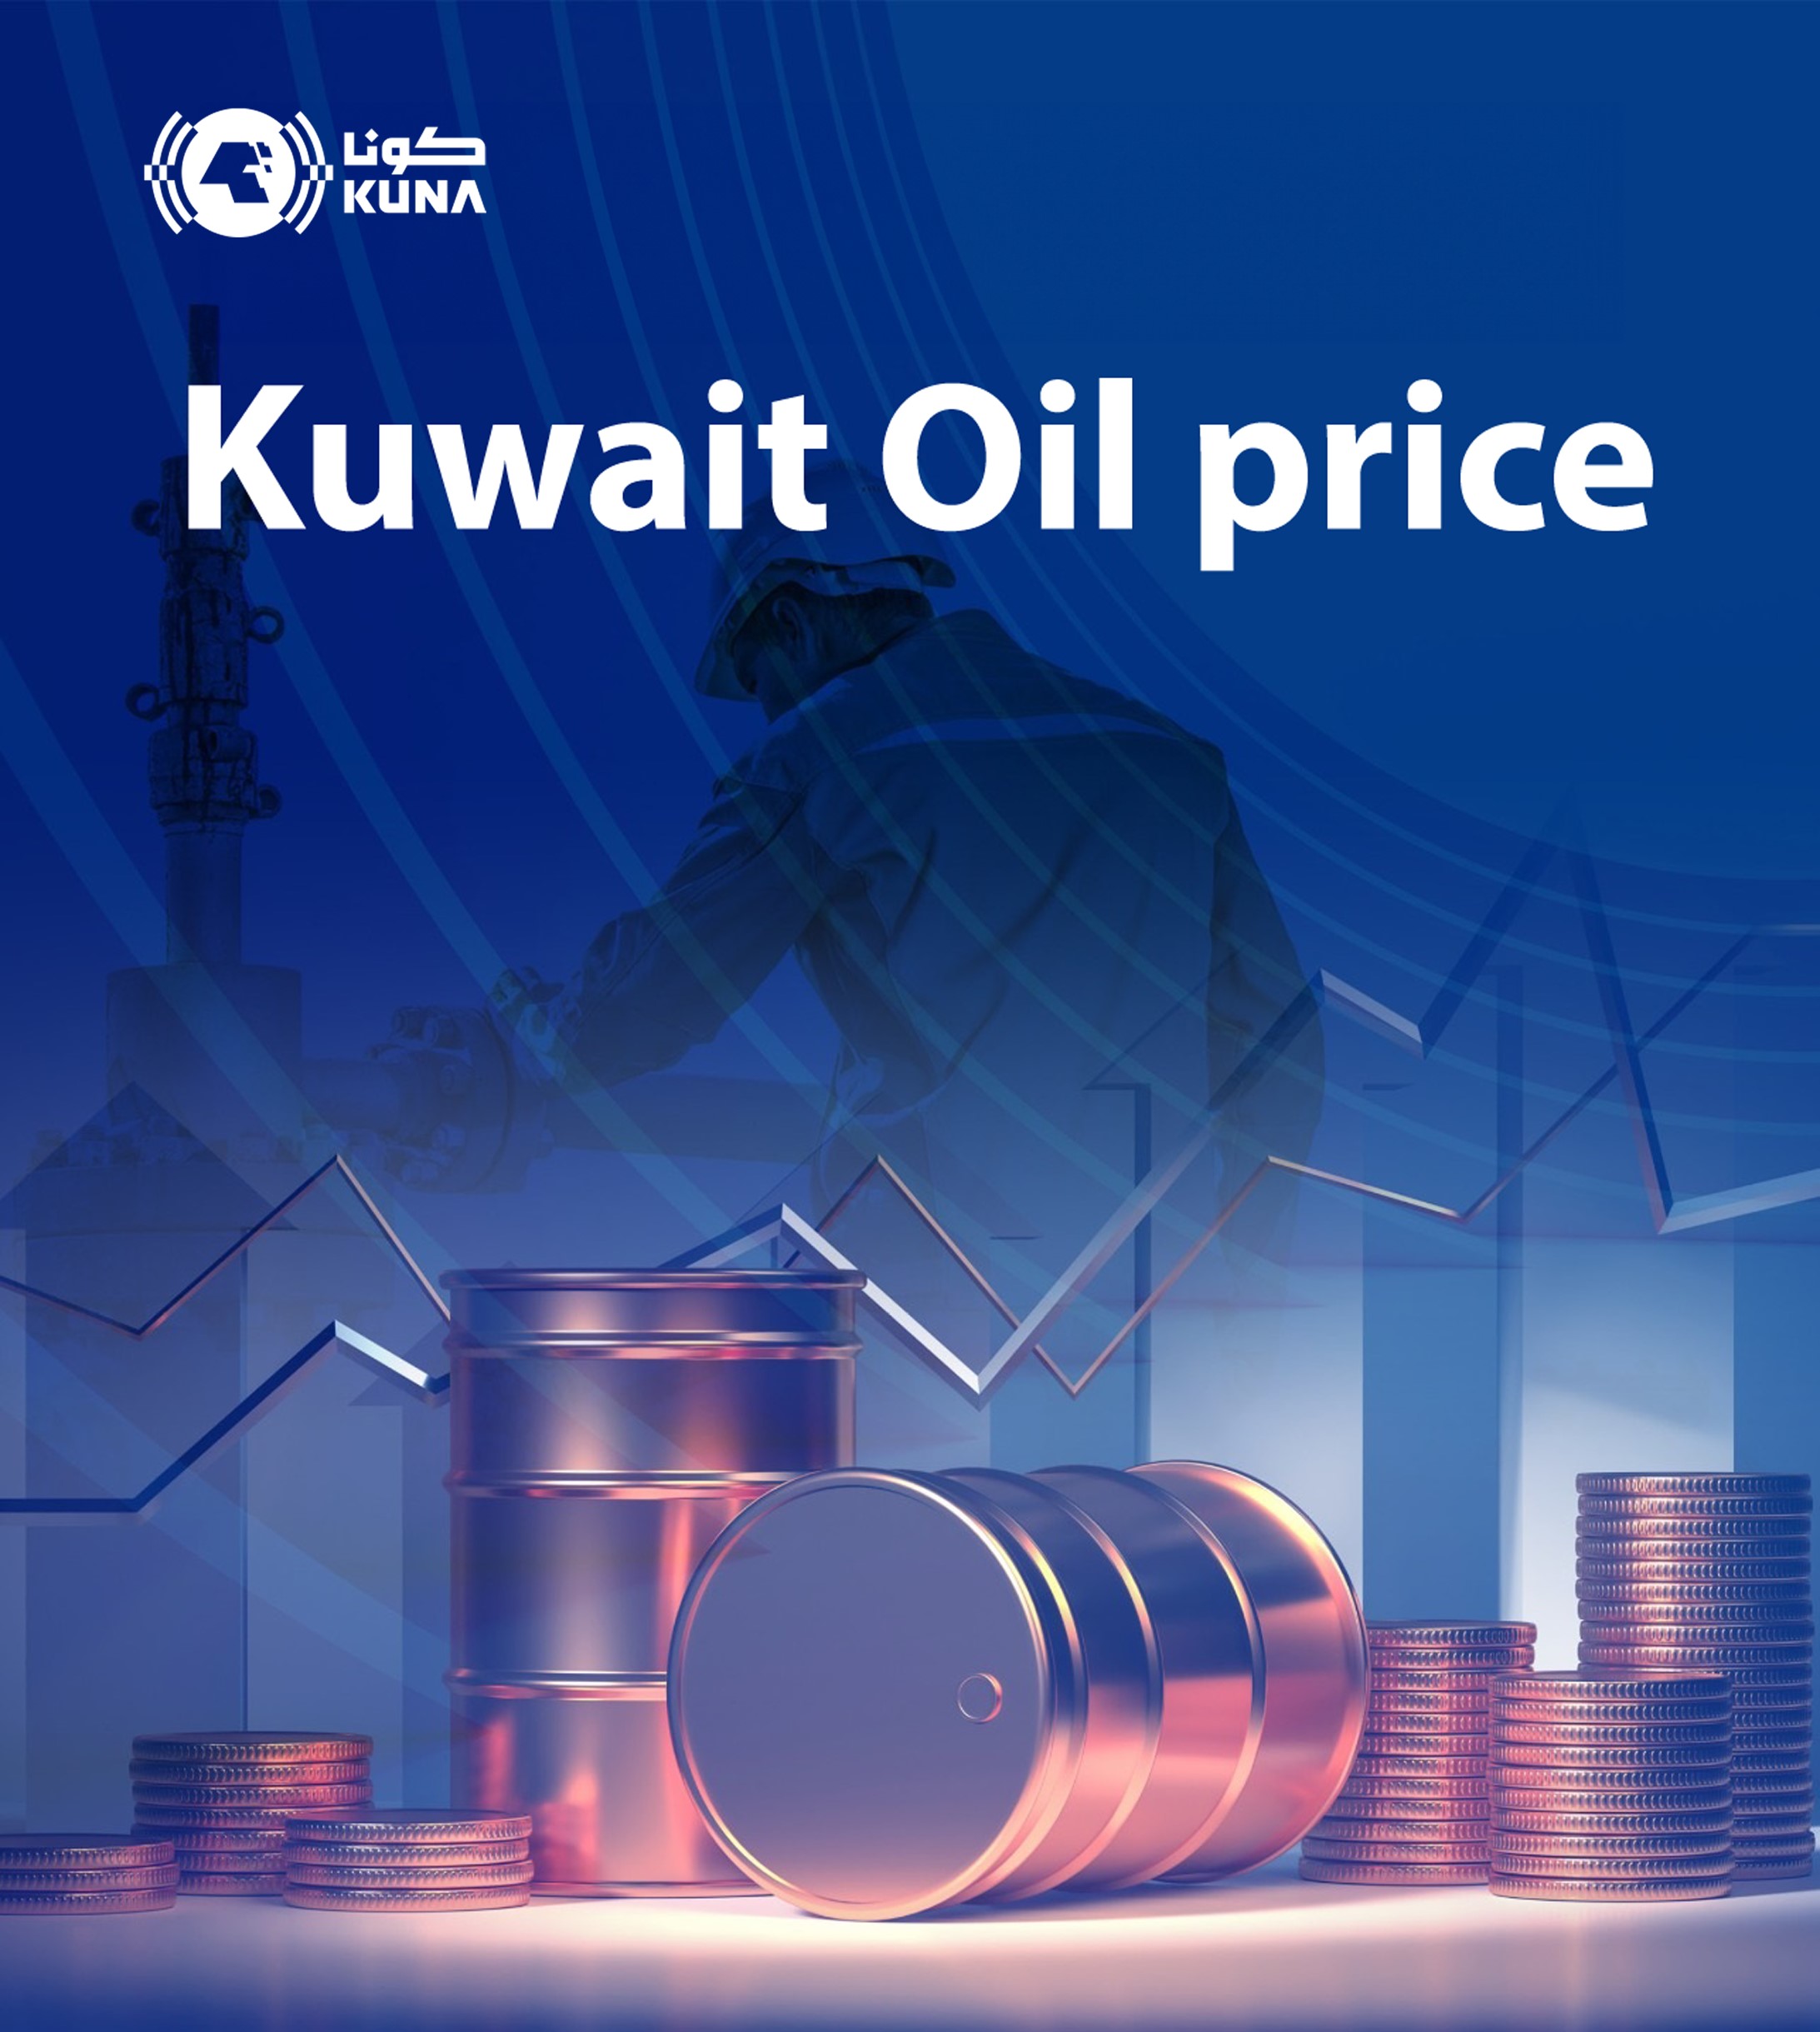 Kuwait crude oil drops six cents Wed. to USD 90.83 pb - KPC                                                                                                                                                                                               